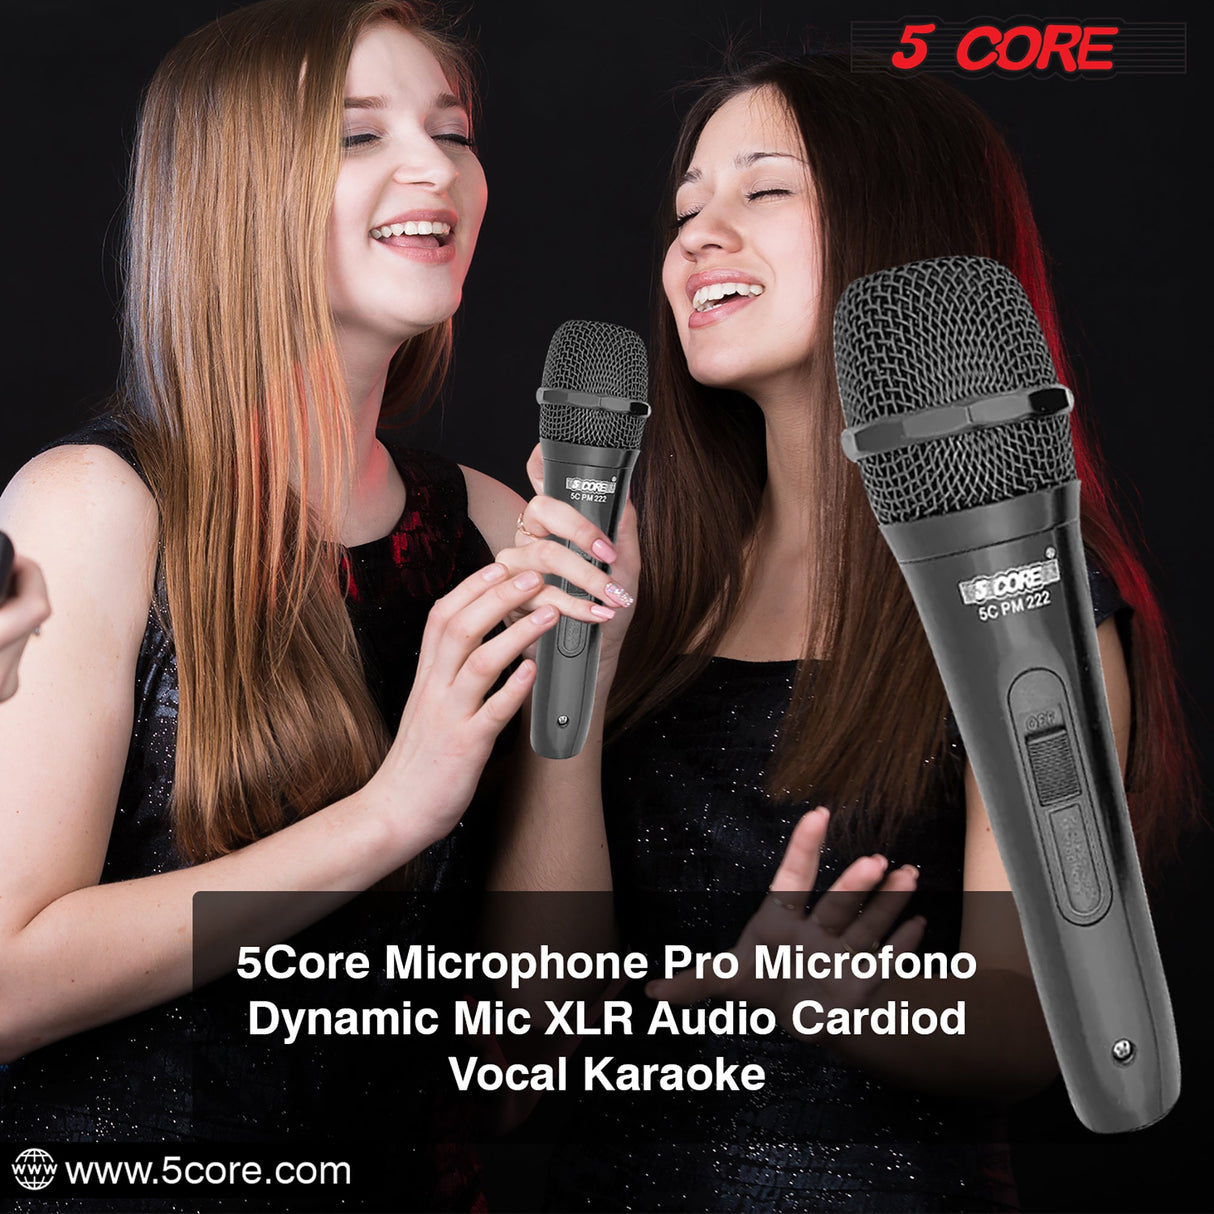 5 Core Professional Microphone Audio Dynamic Cardiod Karaoke Singing Wired Mic Music Recording Karoke Microphone PM 222